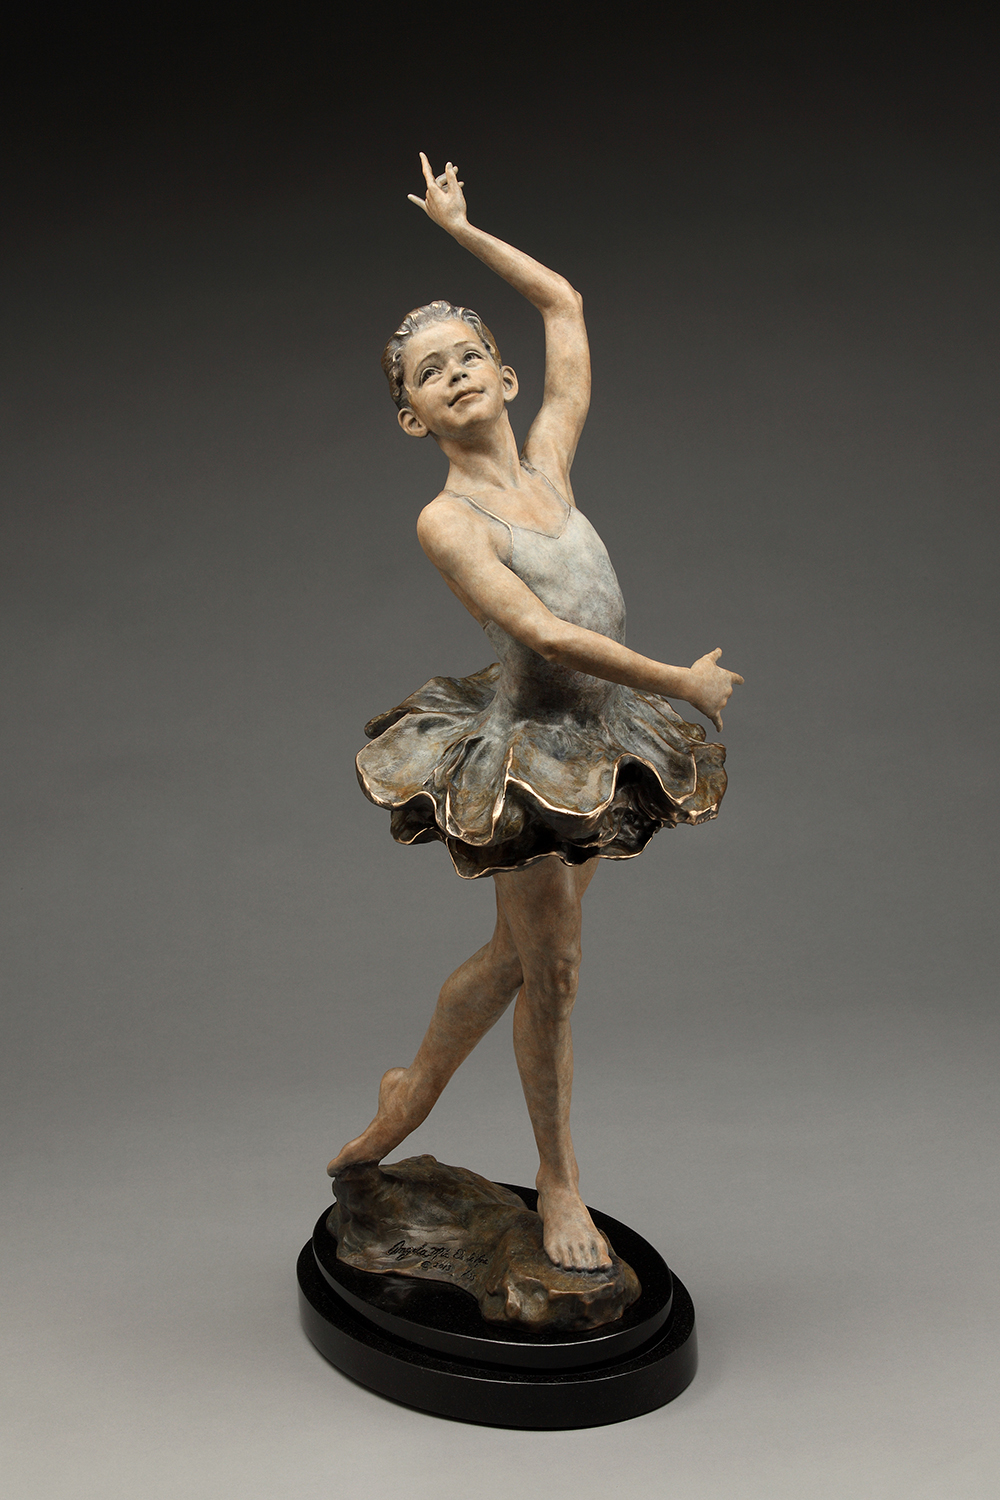 Poetic Figurative Bronze Sculptures By Angela Mia De La Vega (19)